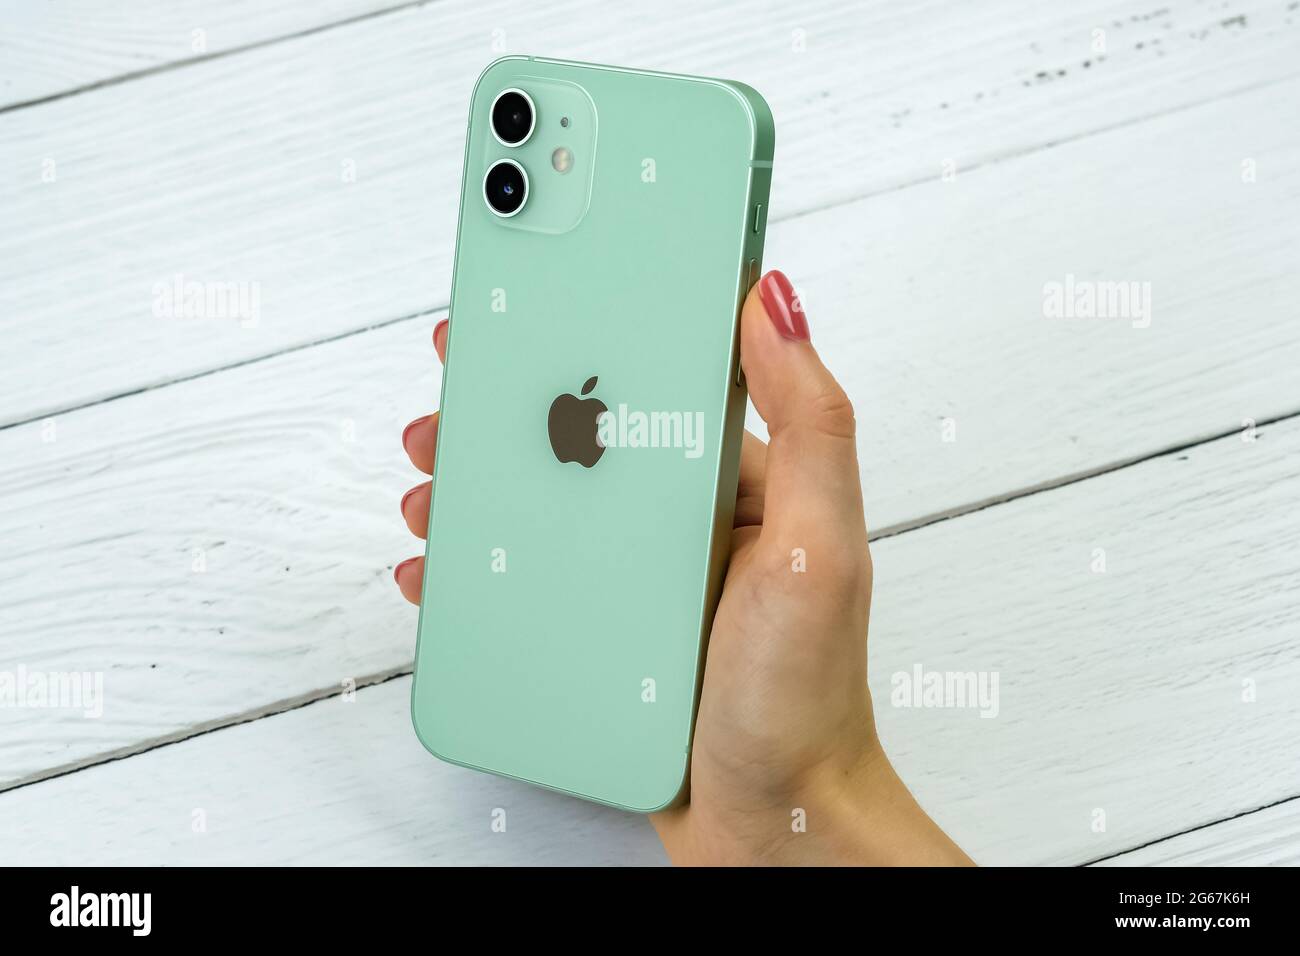 IPhone 12 di colore verde Foto stock - Alamy